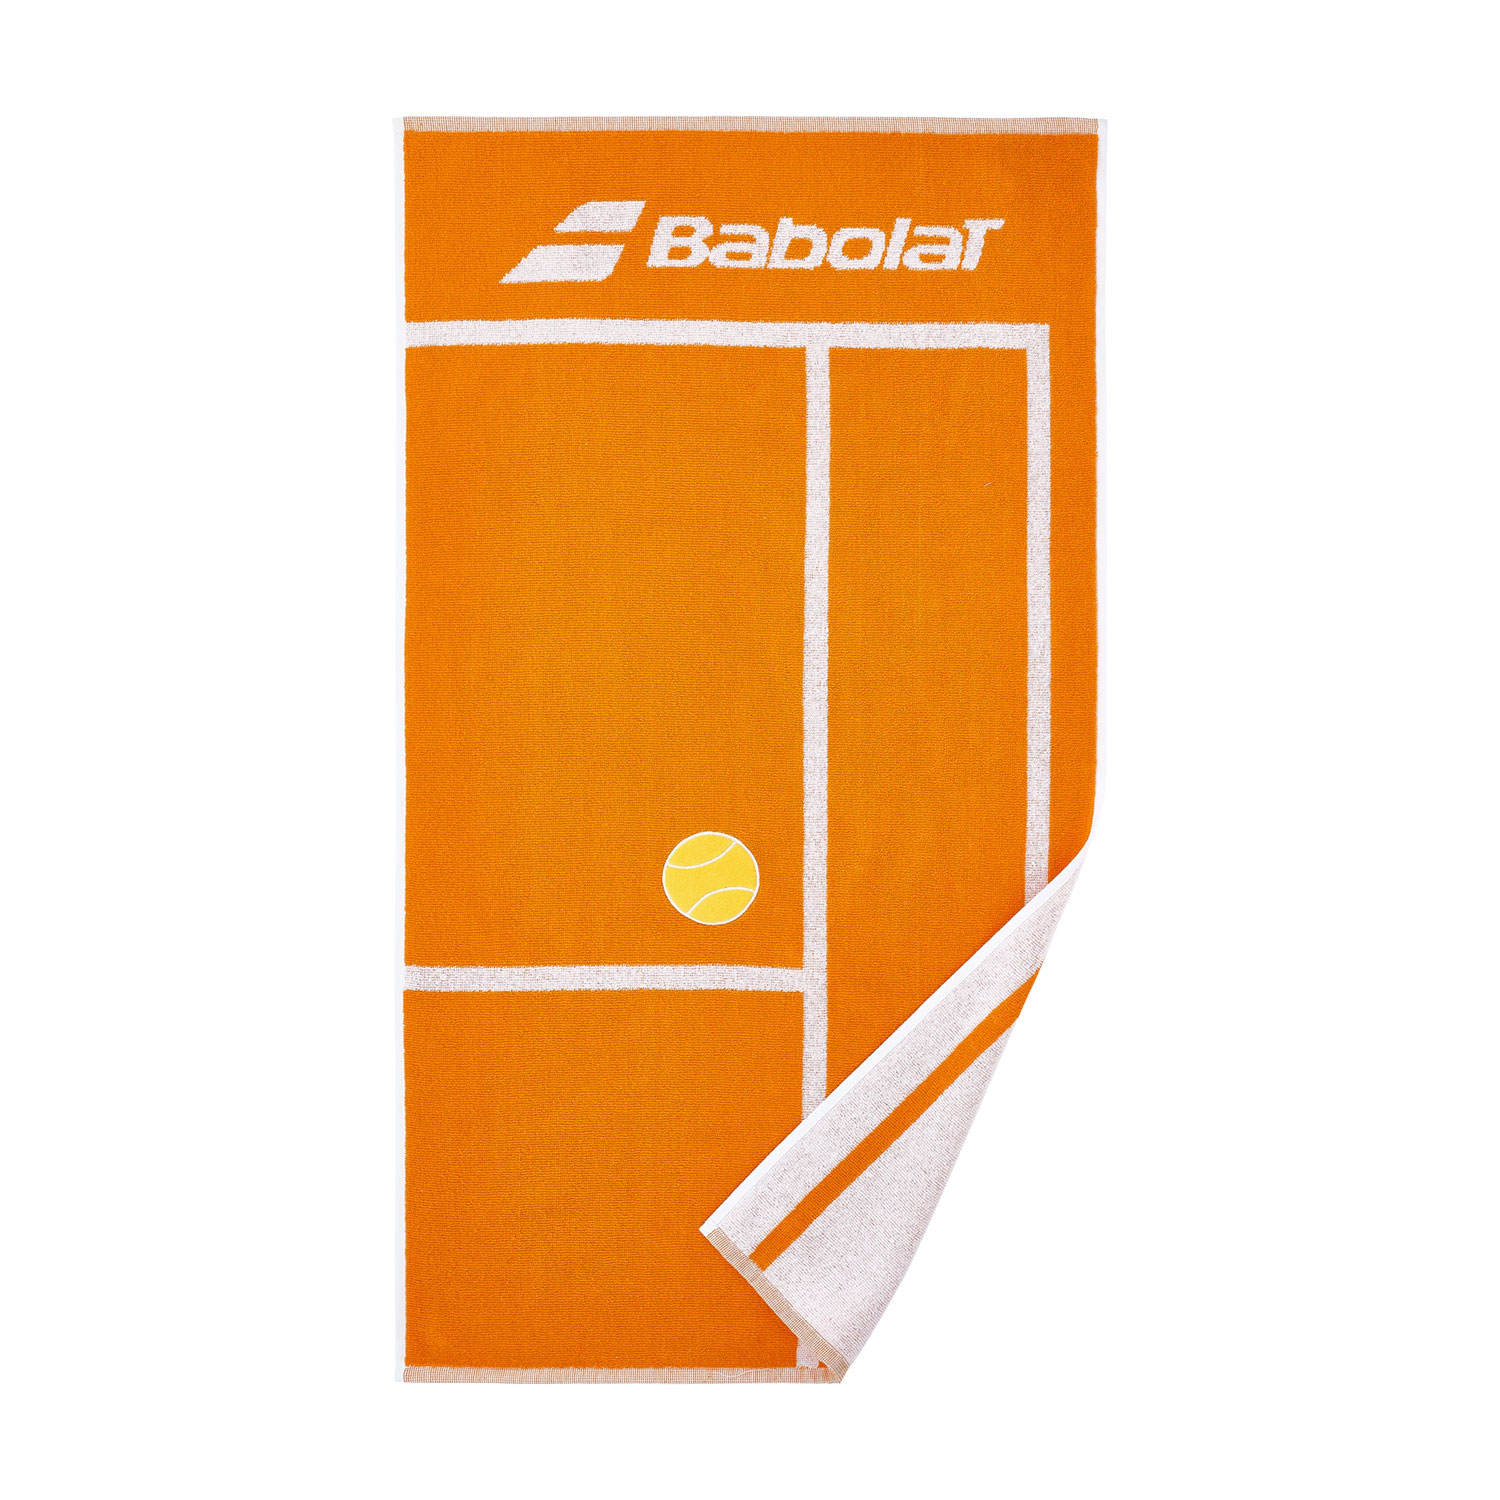 Babolat Graphic Towel - Tangelo Orange